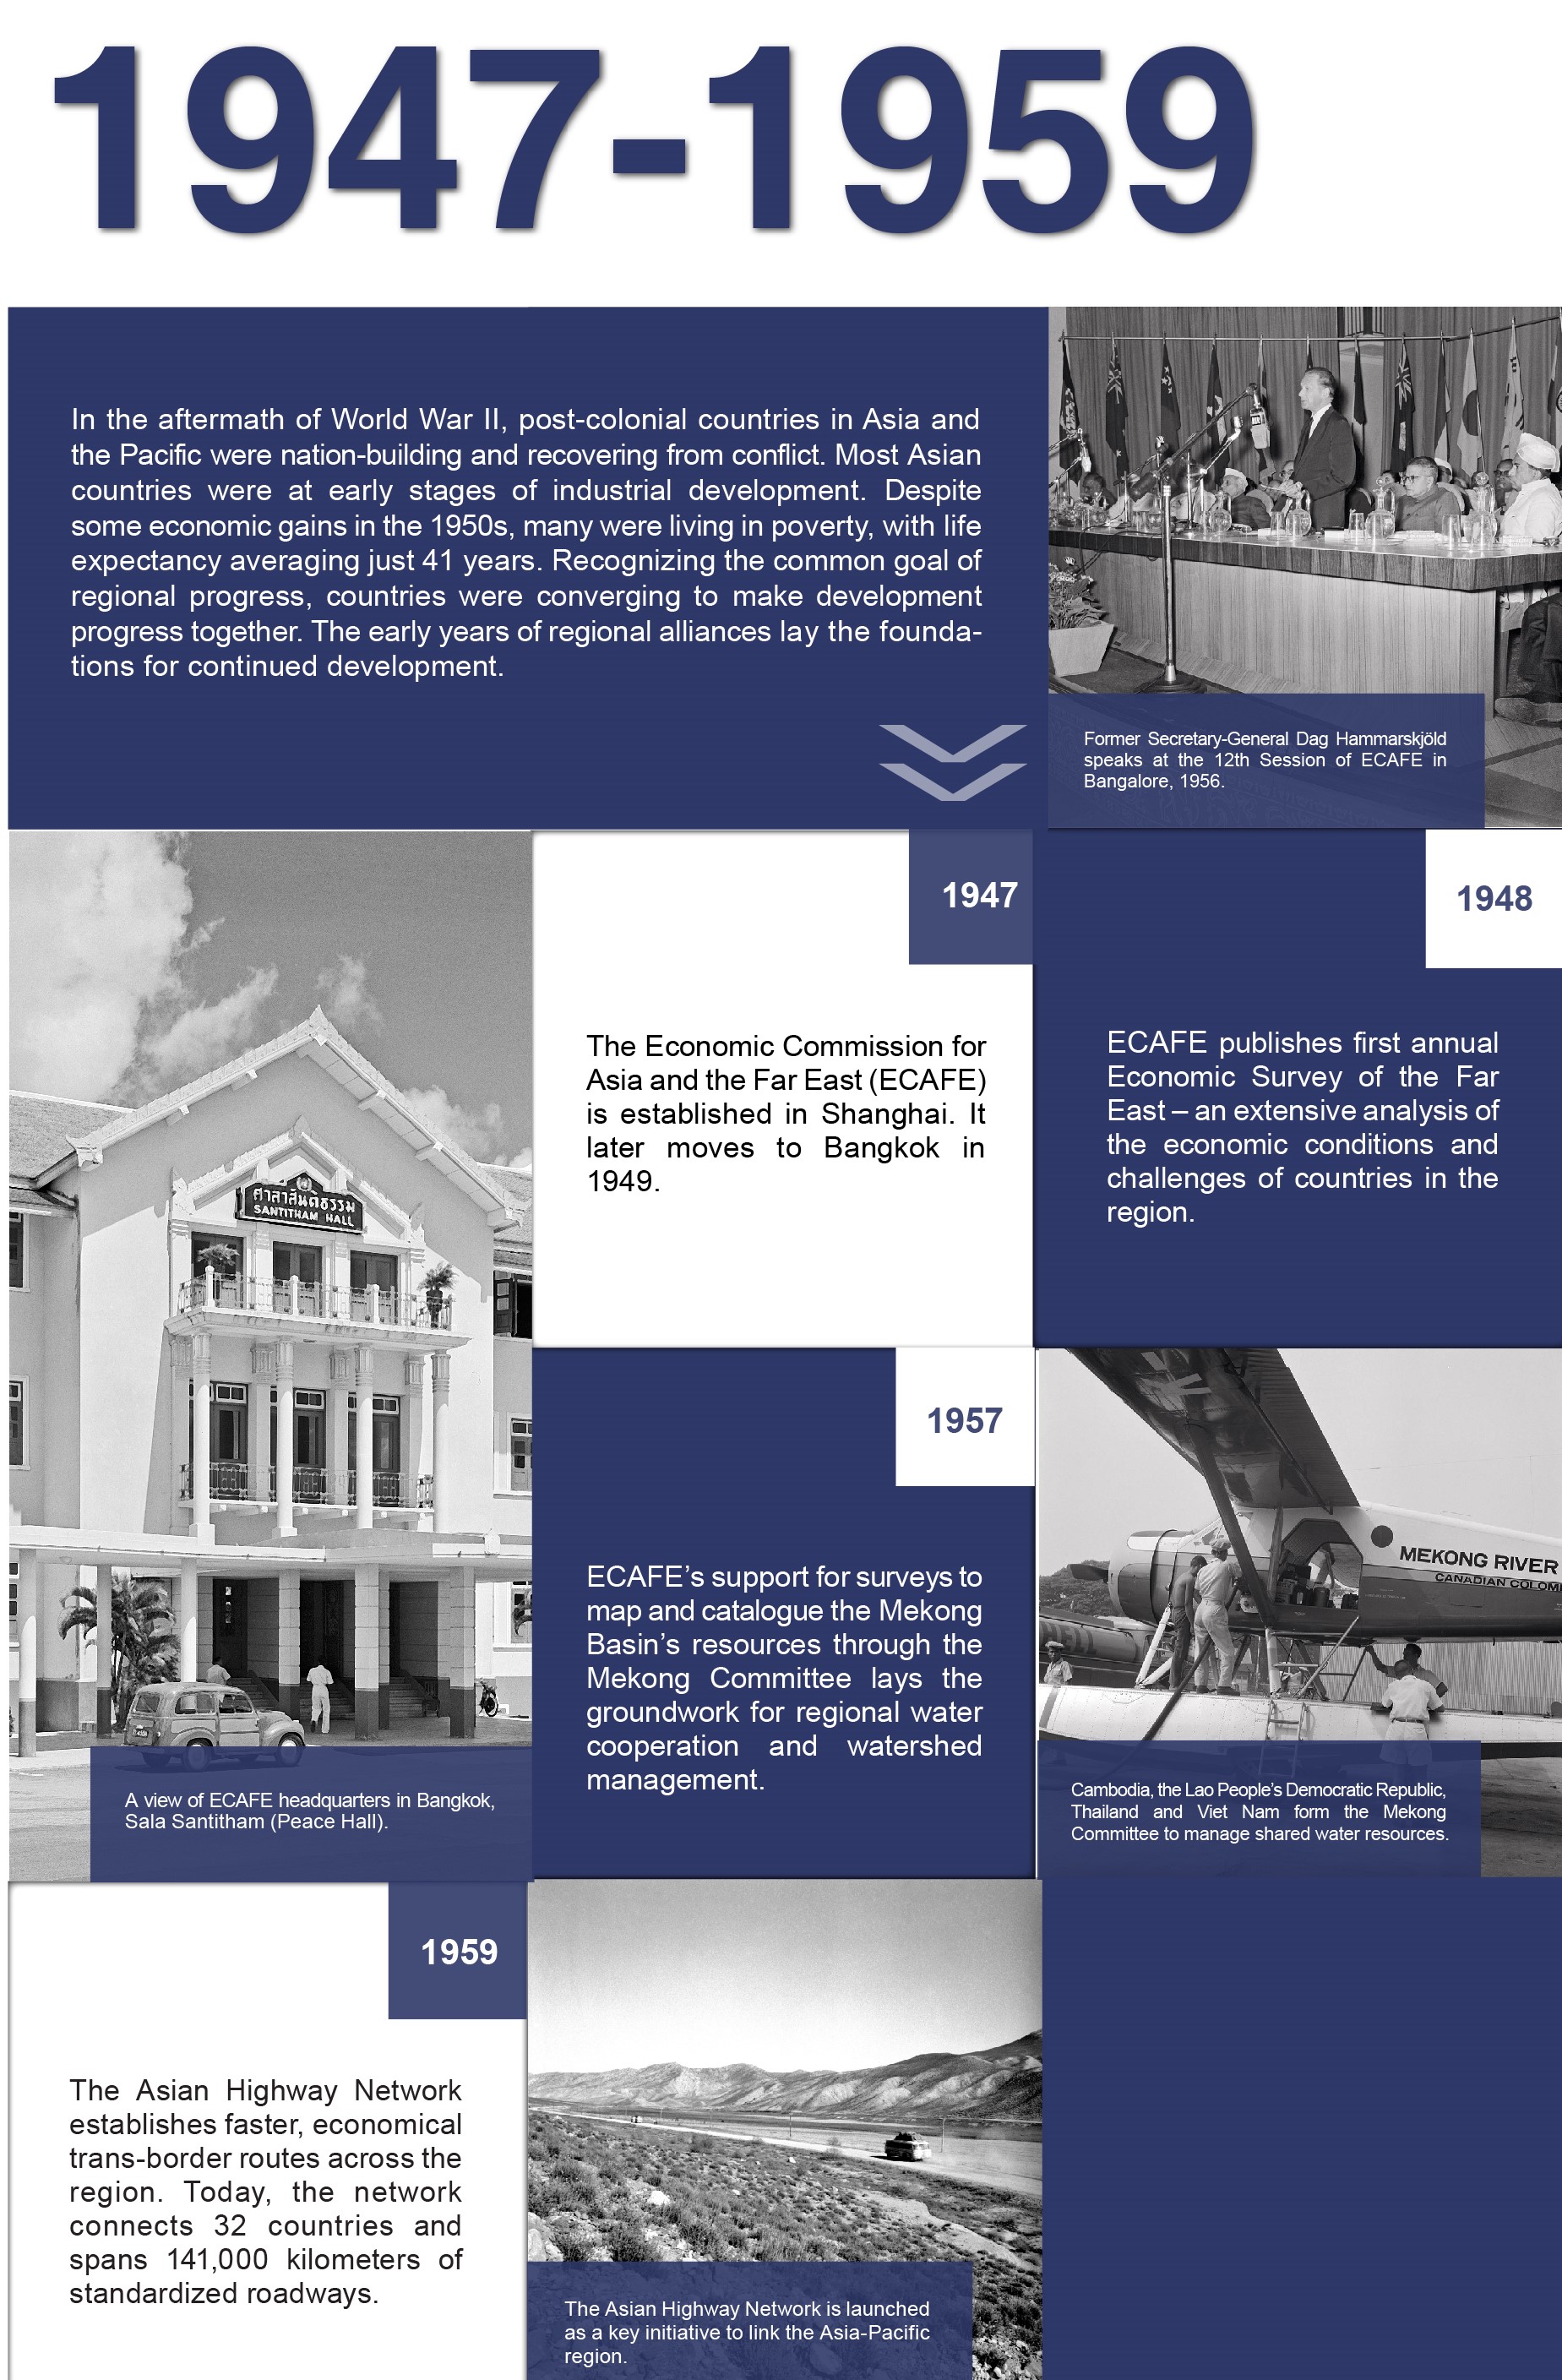 ESCAP75 History - 1947-1959